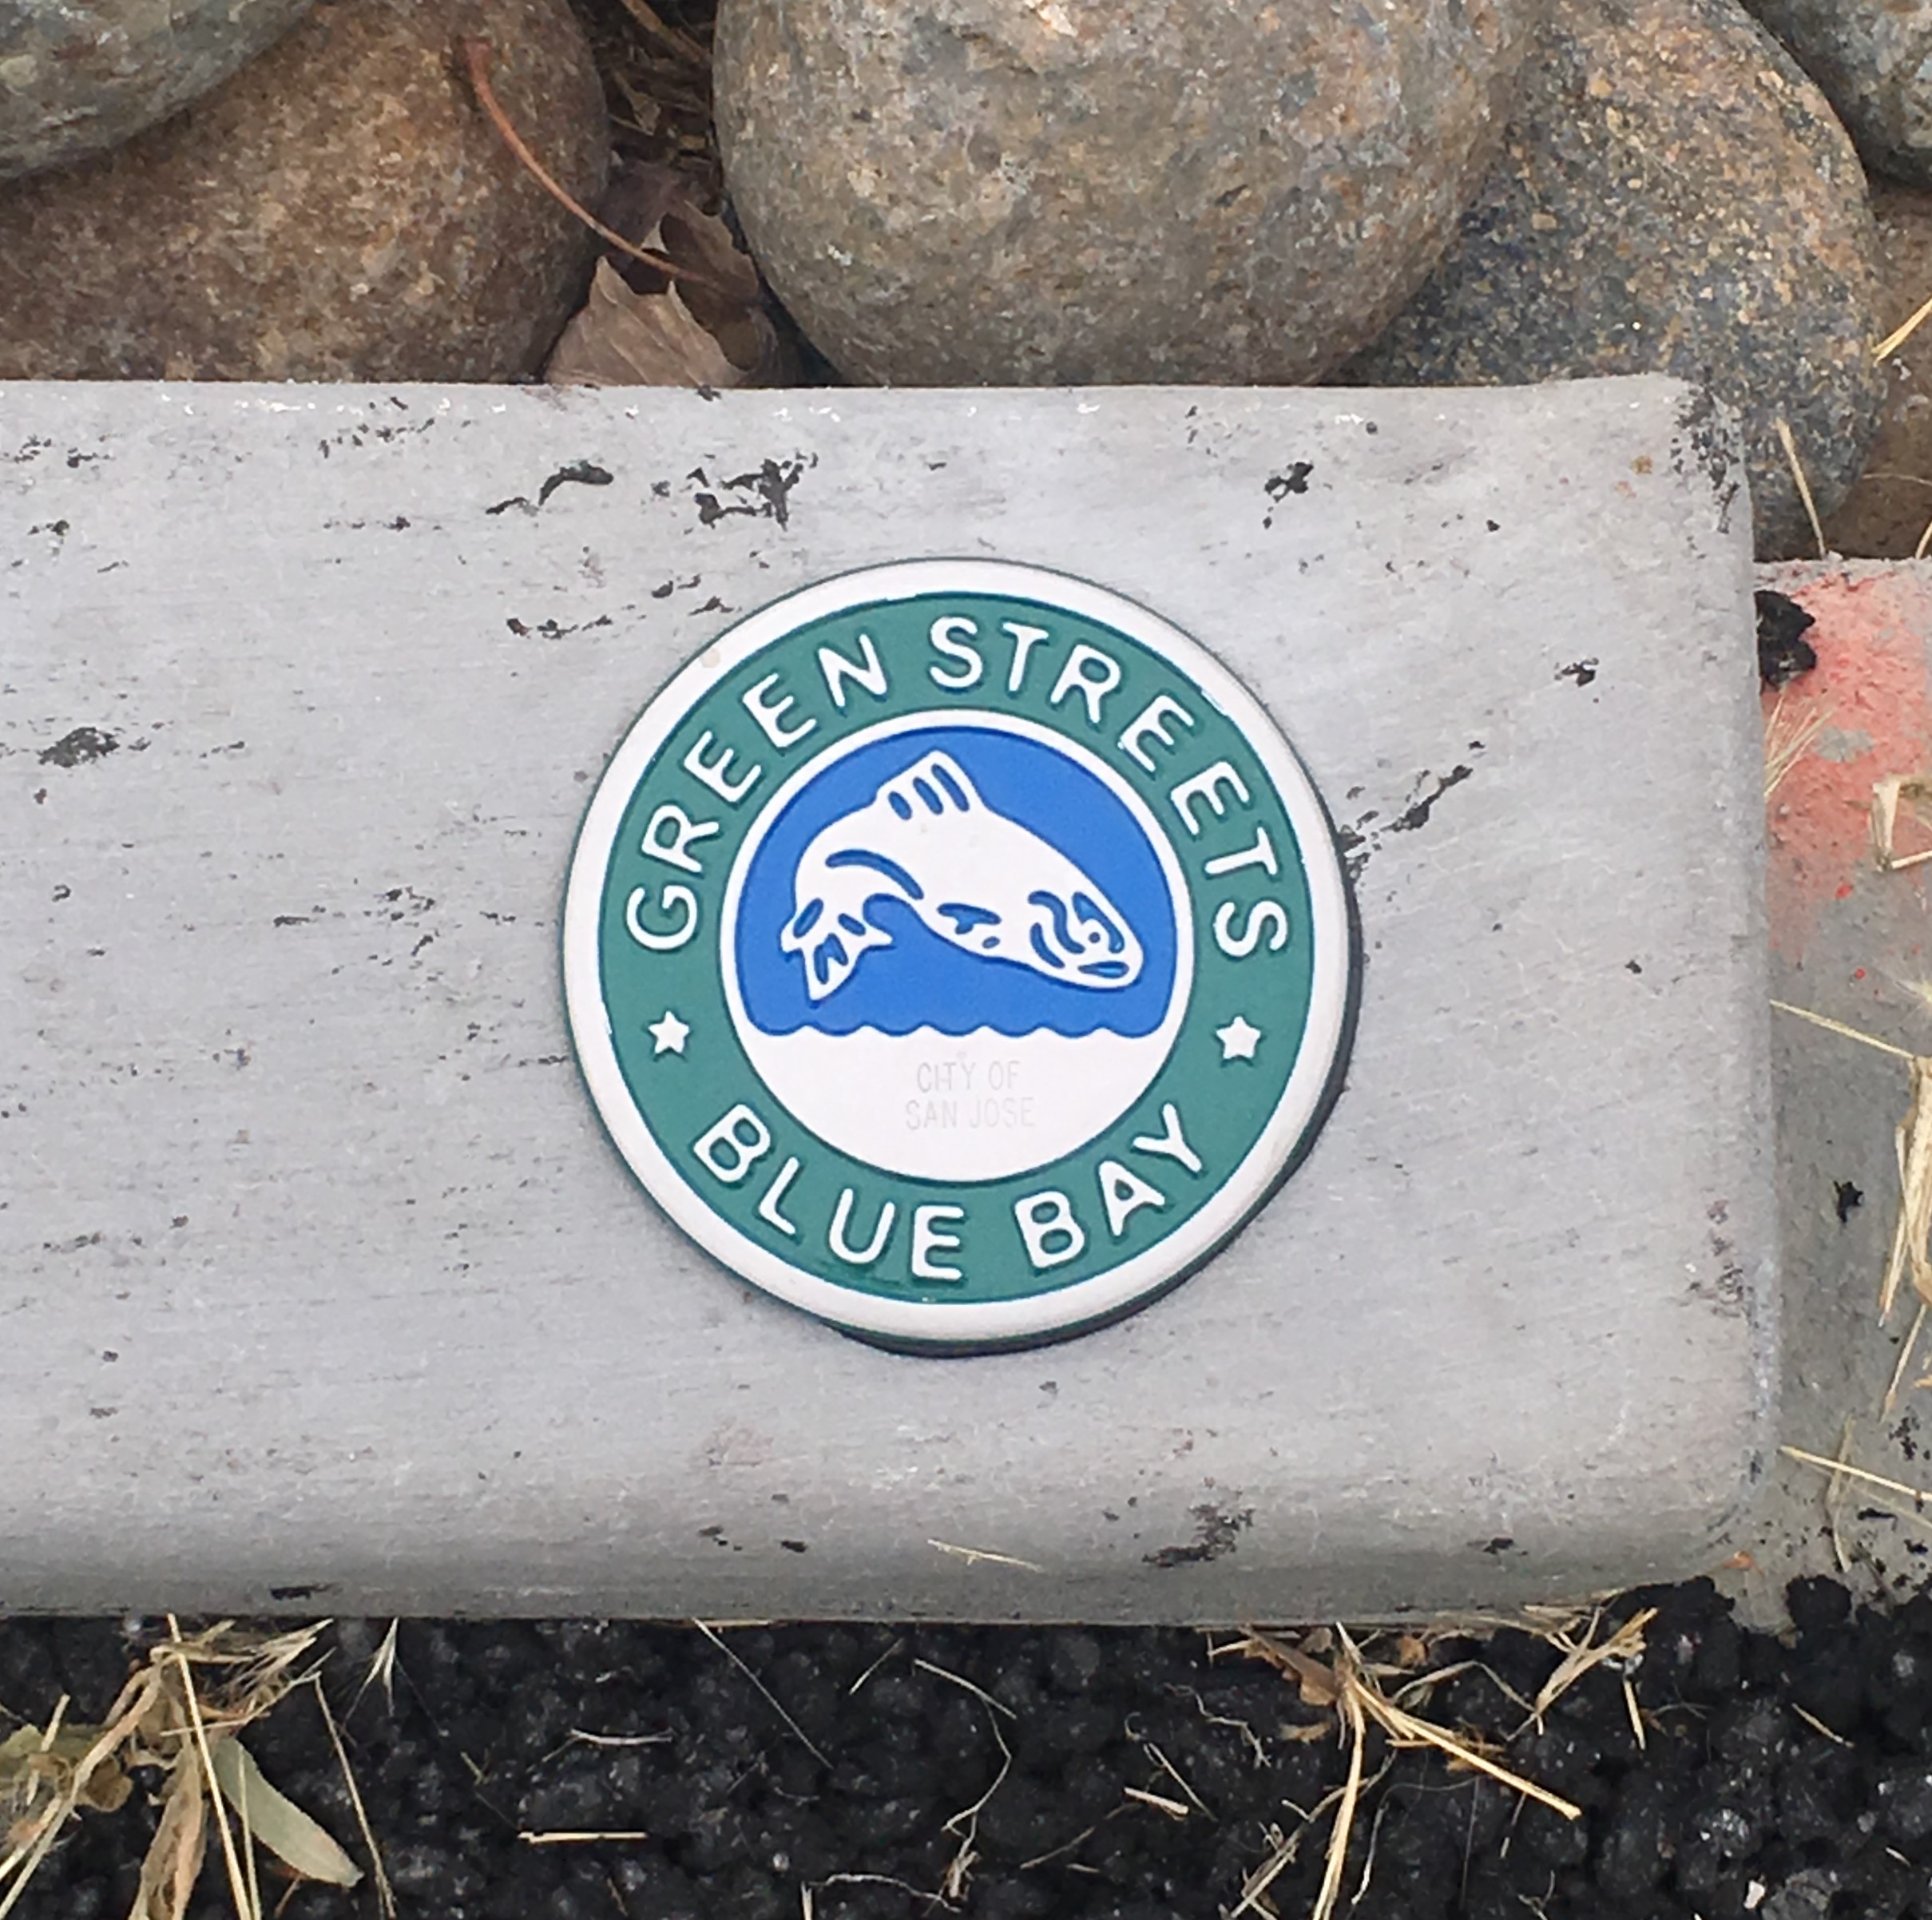 Green Street Blue Bay seal